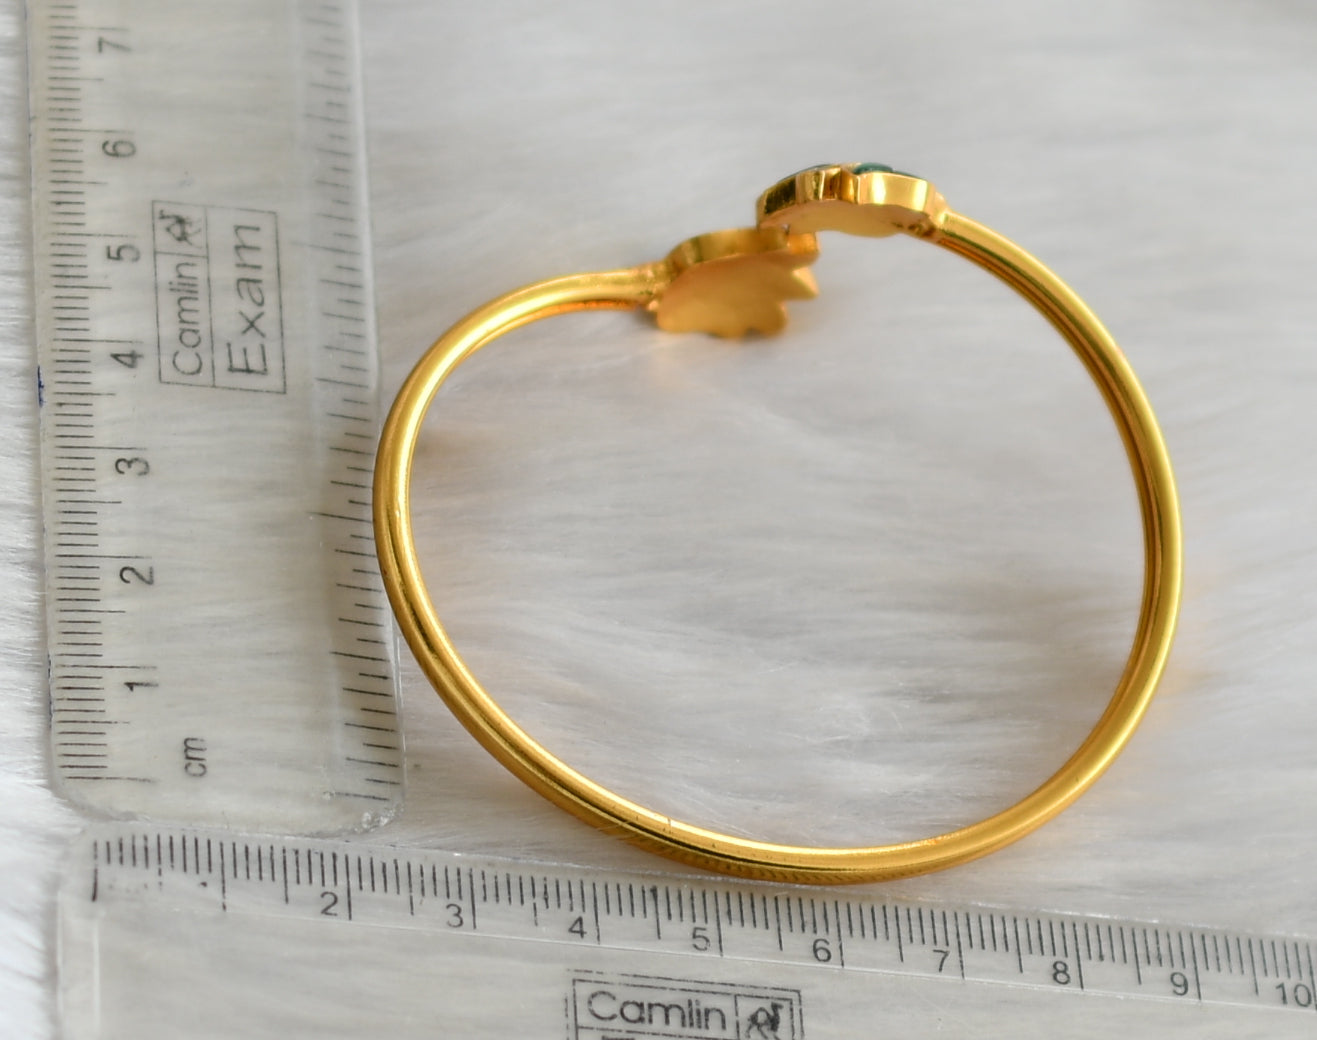 Buy MELORRA 18 kt Lotus Dapple Gold Bracelet at Amazon.in